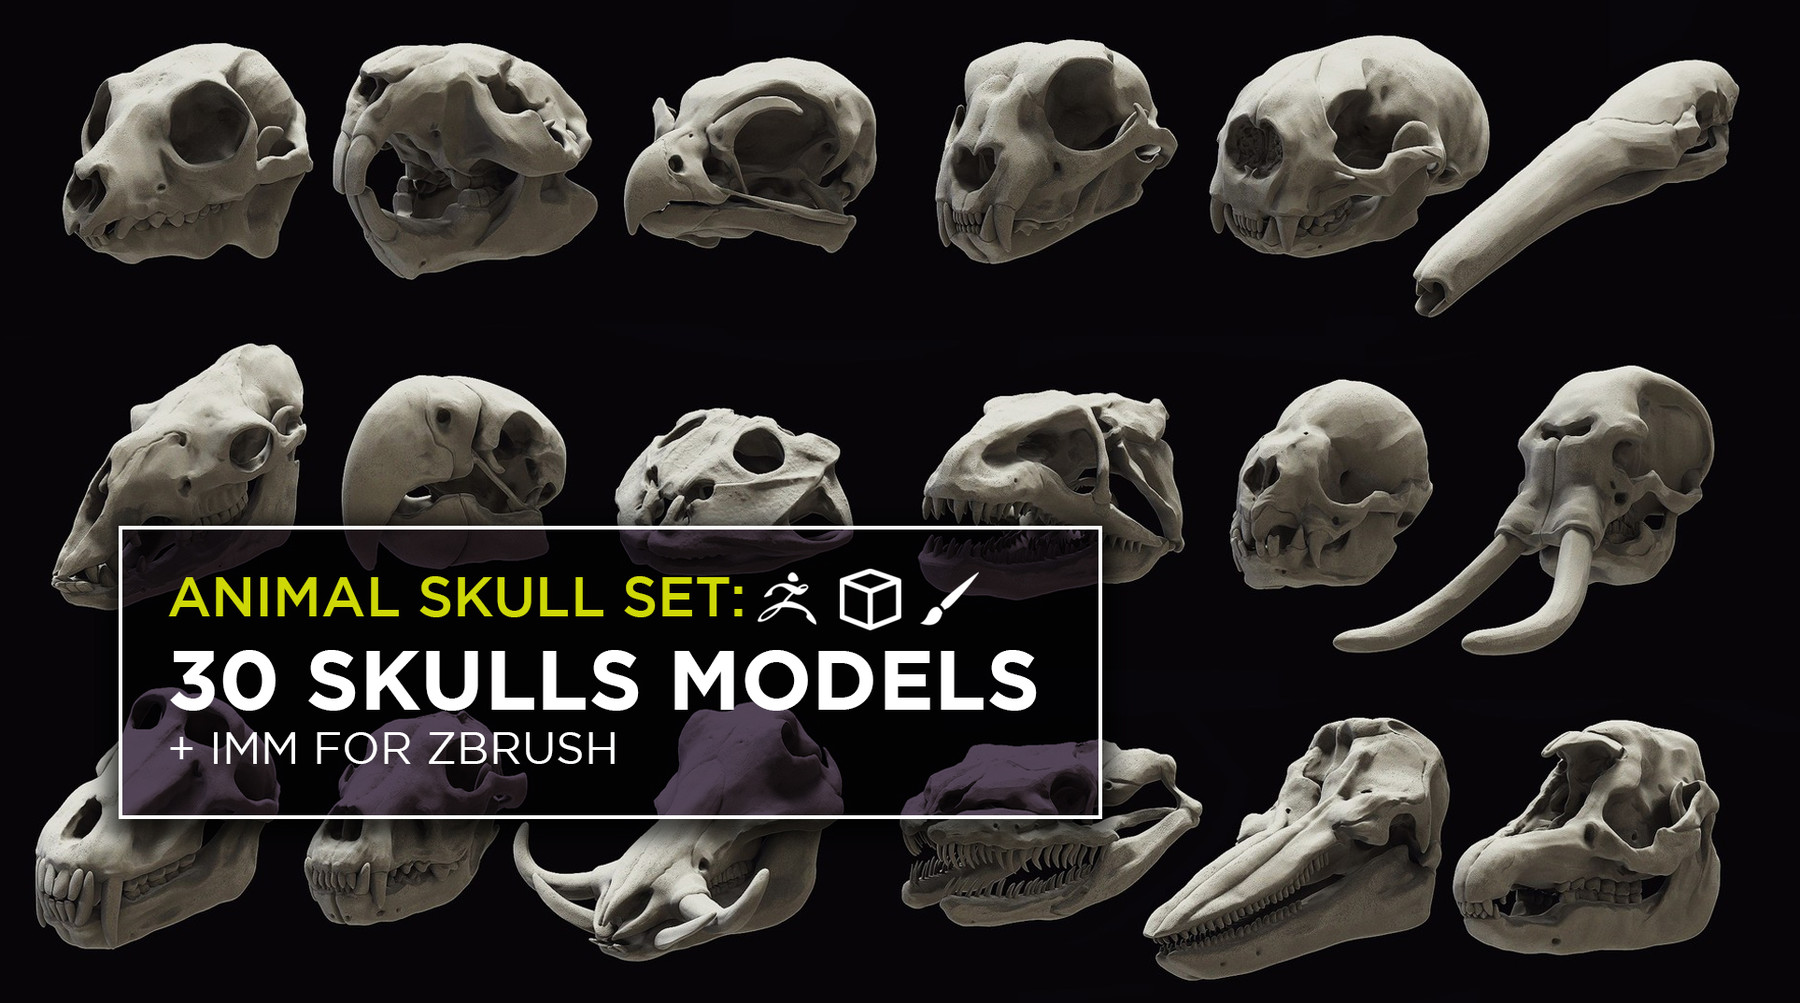 ArtStation - 3D Animal Skulls set: 30 skulls + IMM brush | Resources